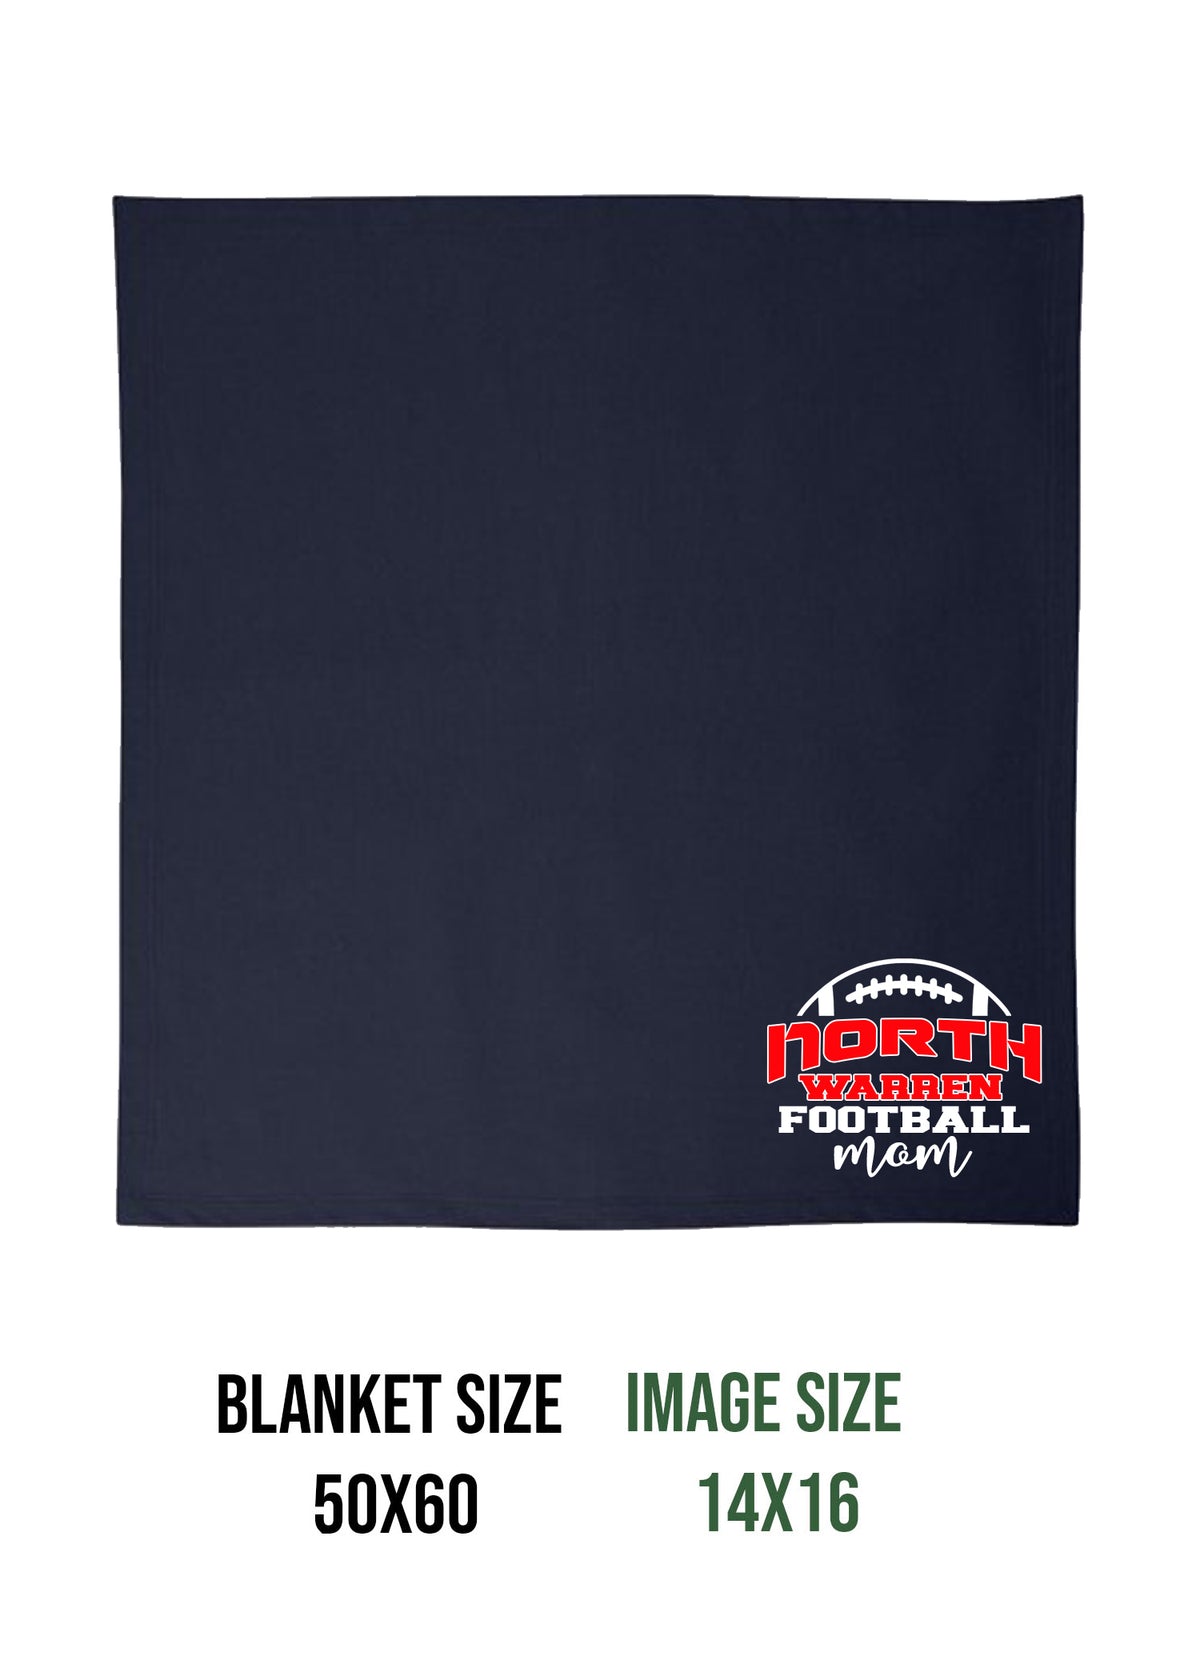 NW Football Design 1 Blanket